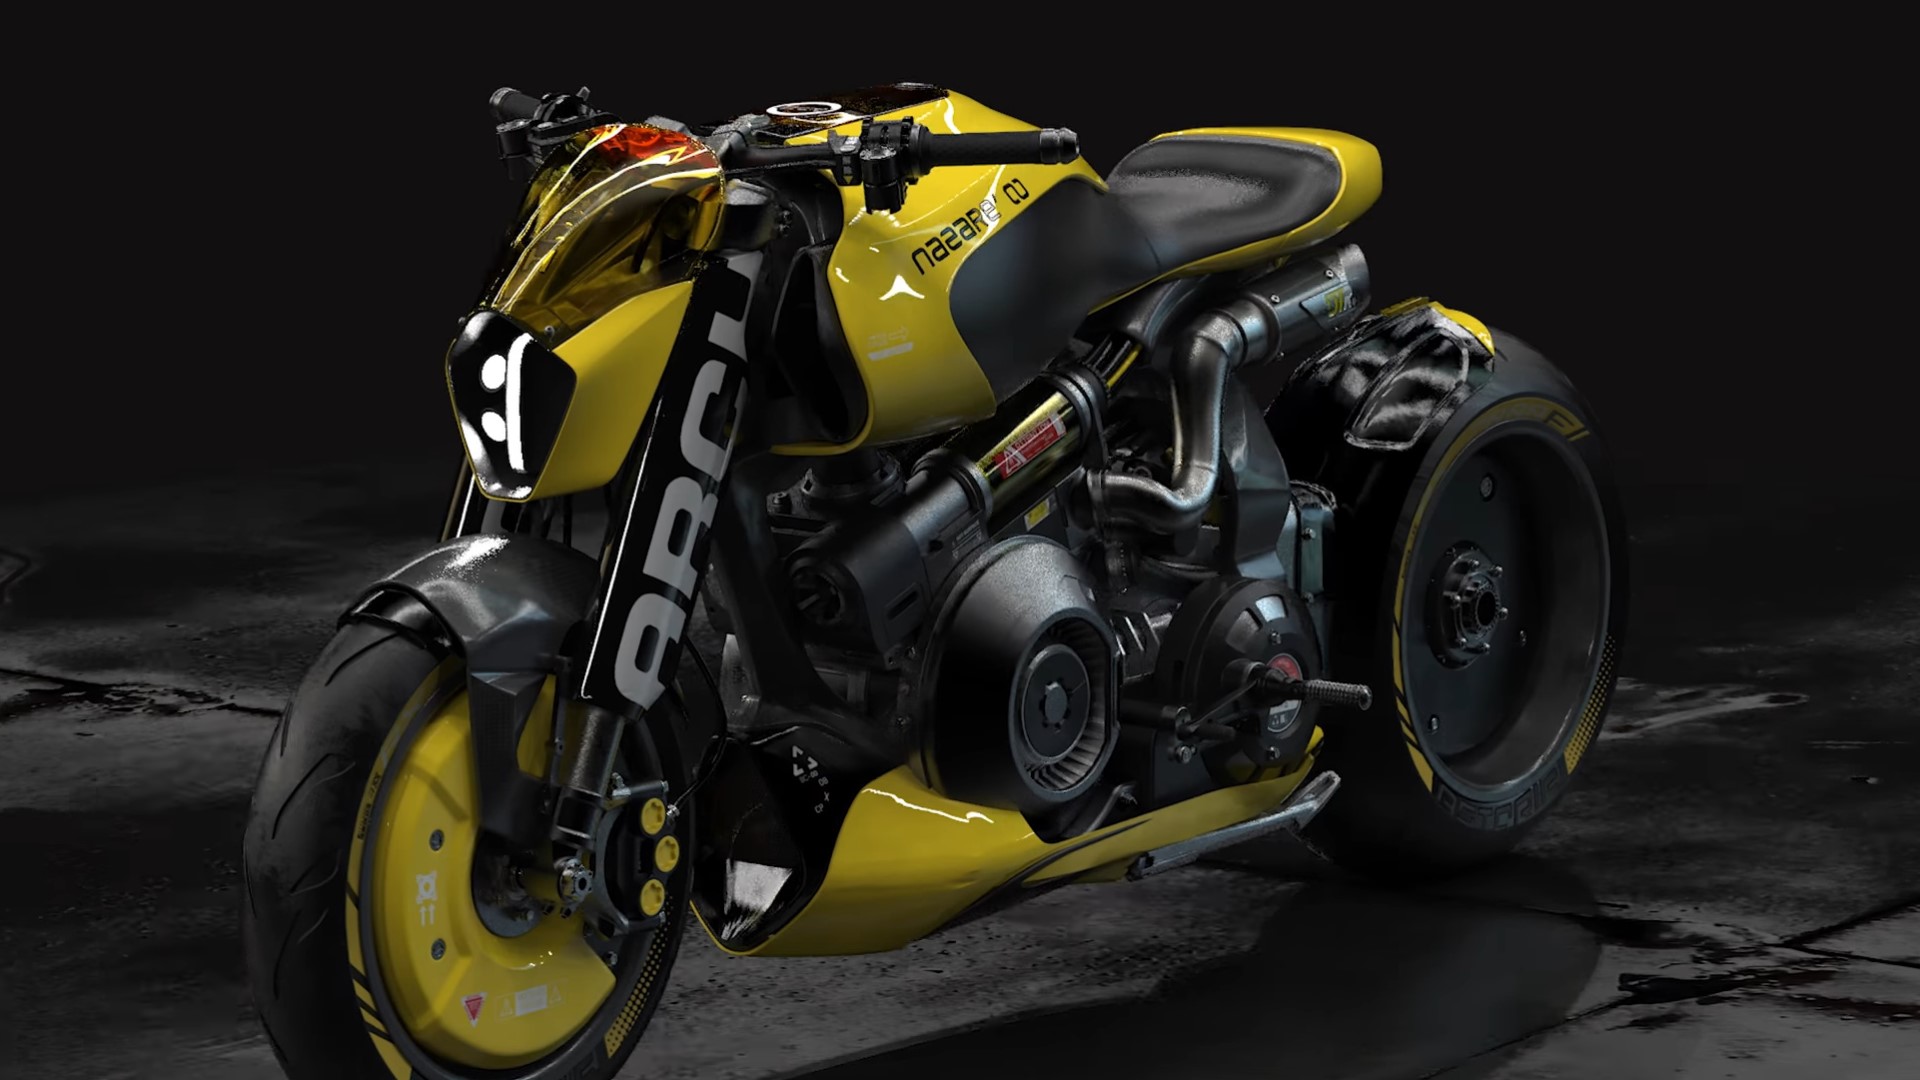 Keanu Reeves' motorcycle company has a custom bike in Cyberpunk 2077